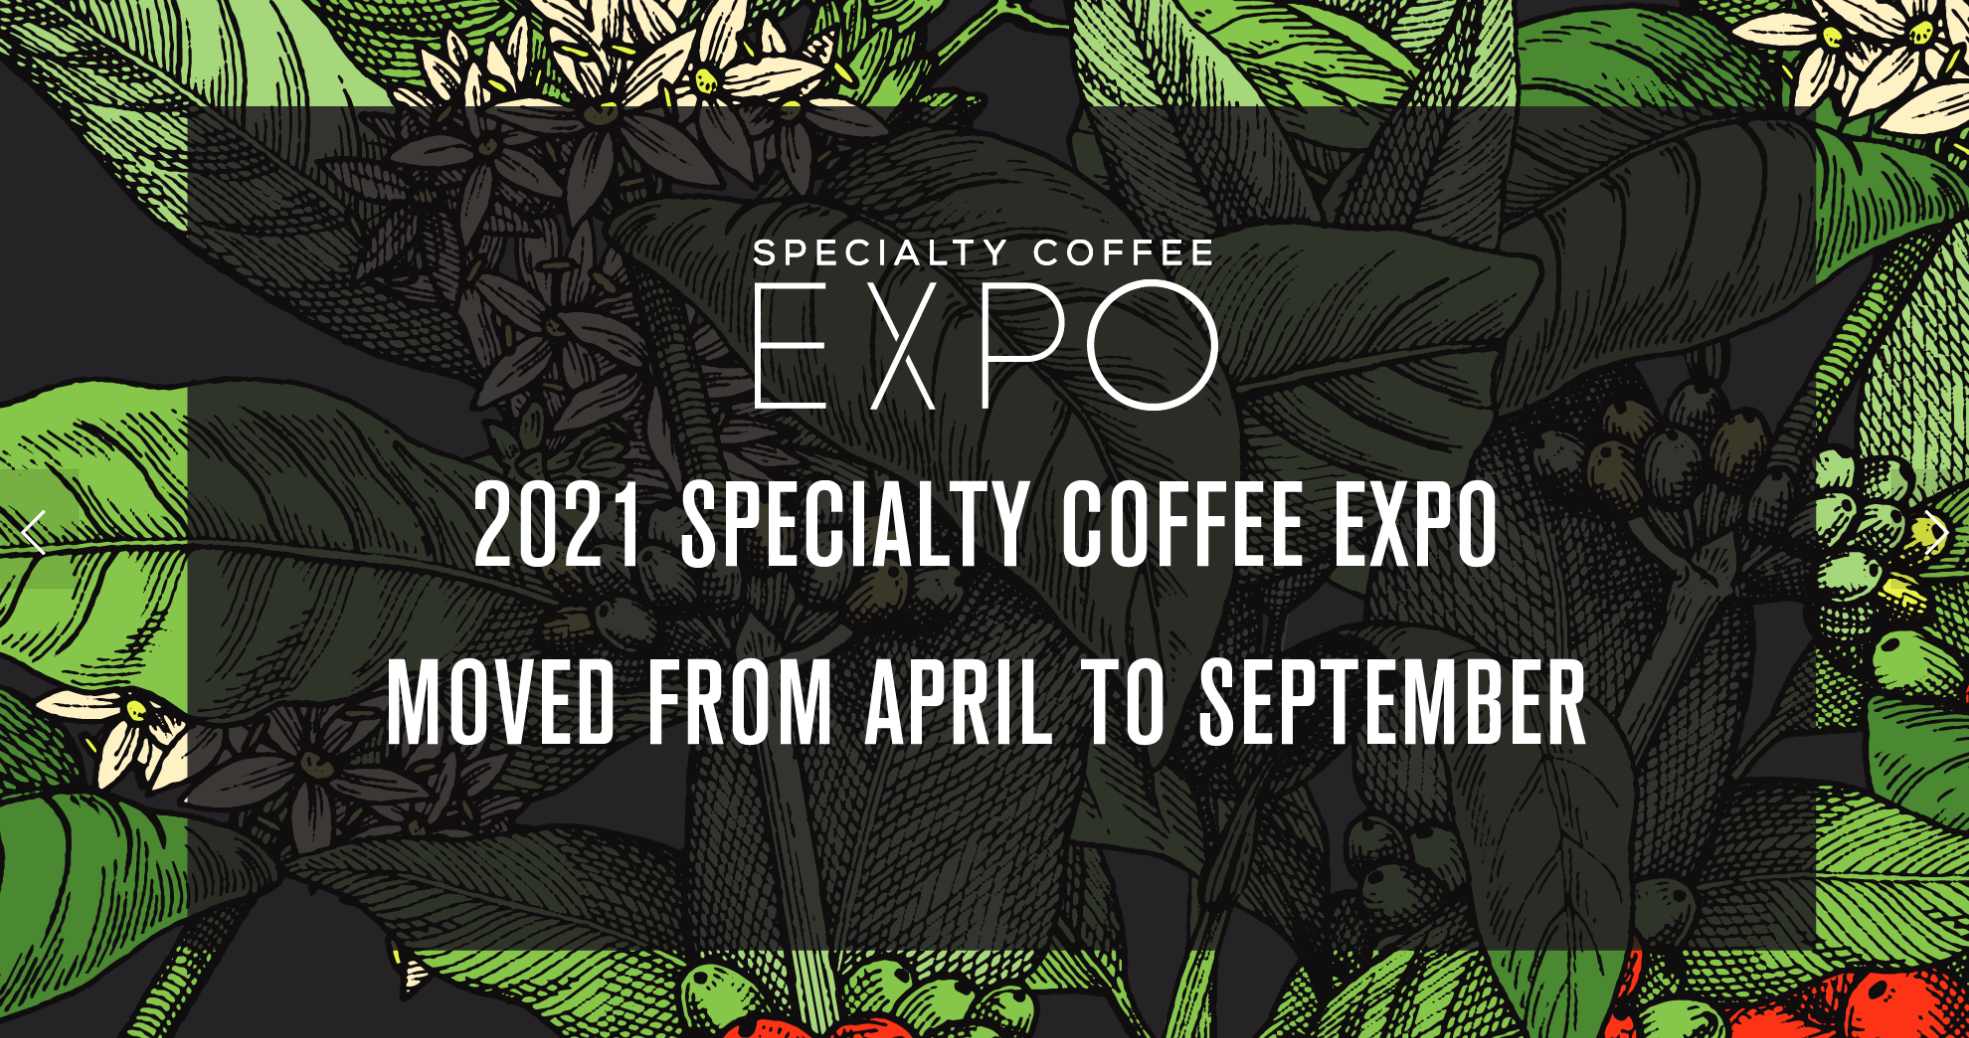 Specialty coffee expo